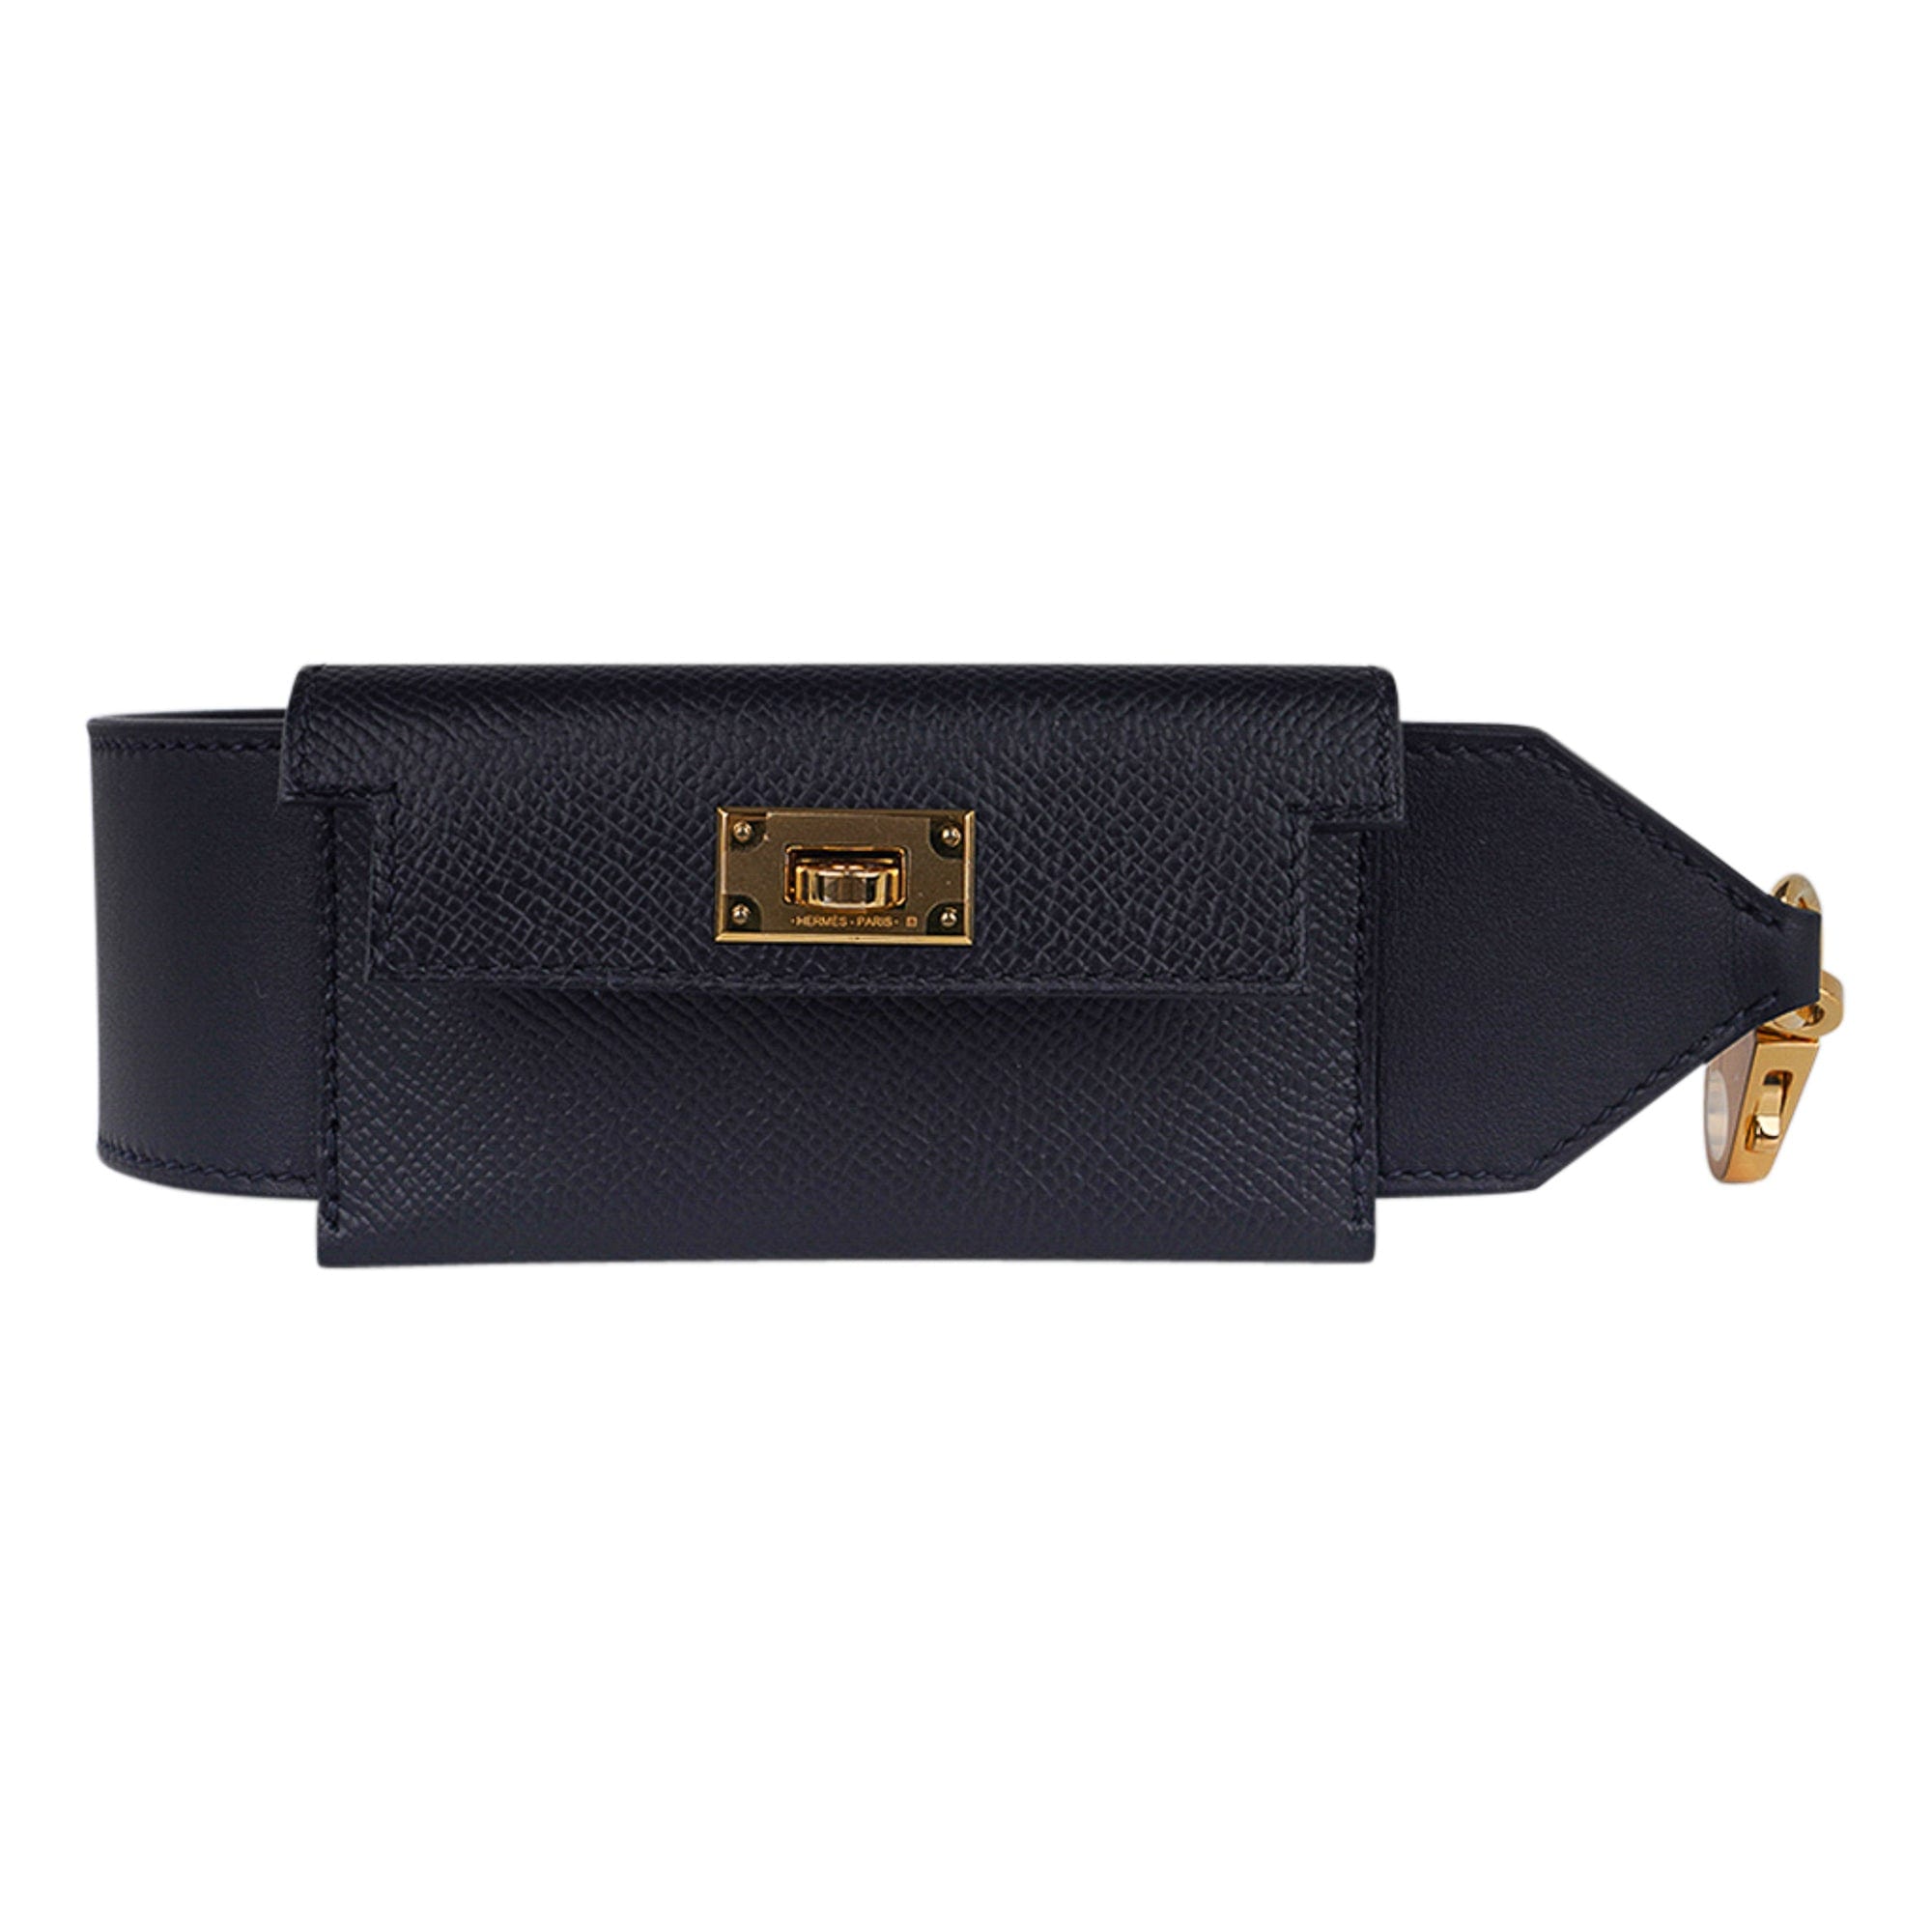 BNIB Hermes Kelly Pocket Bag Strap Black Epsom in PHW